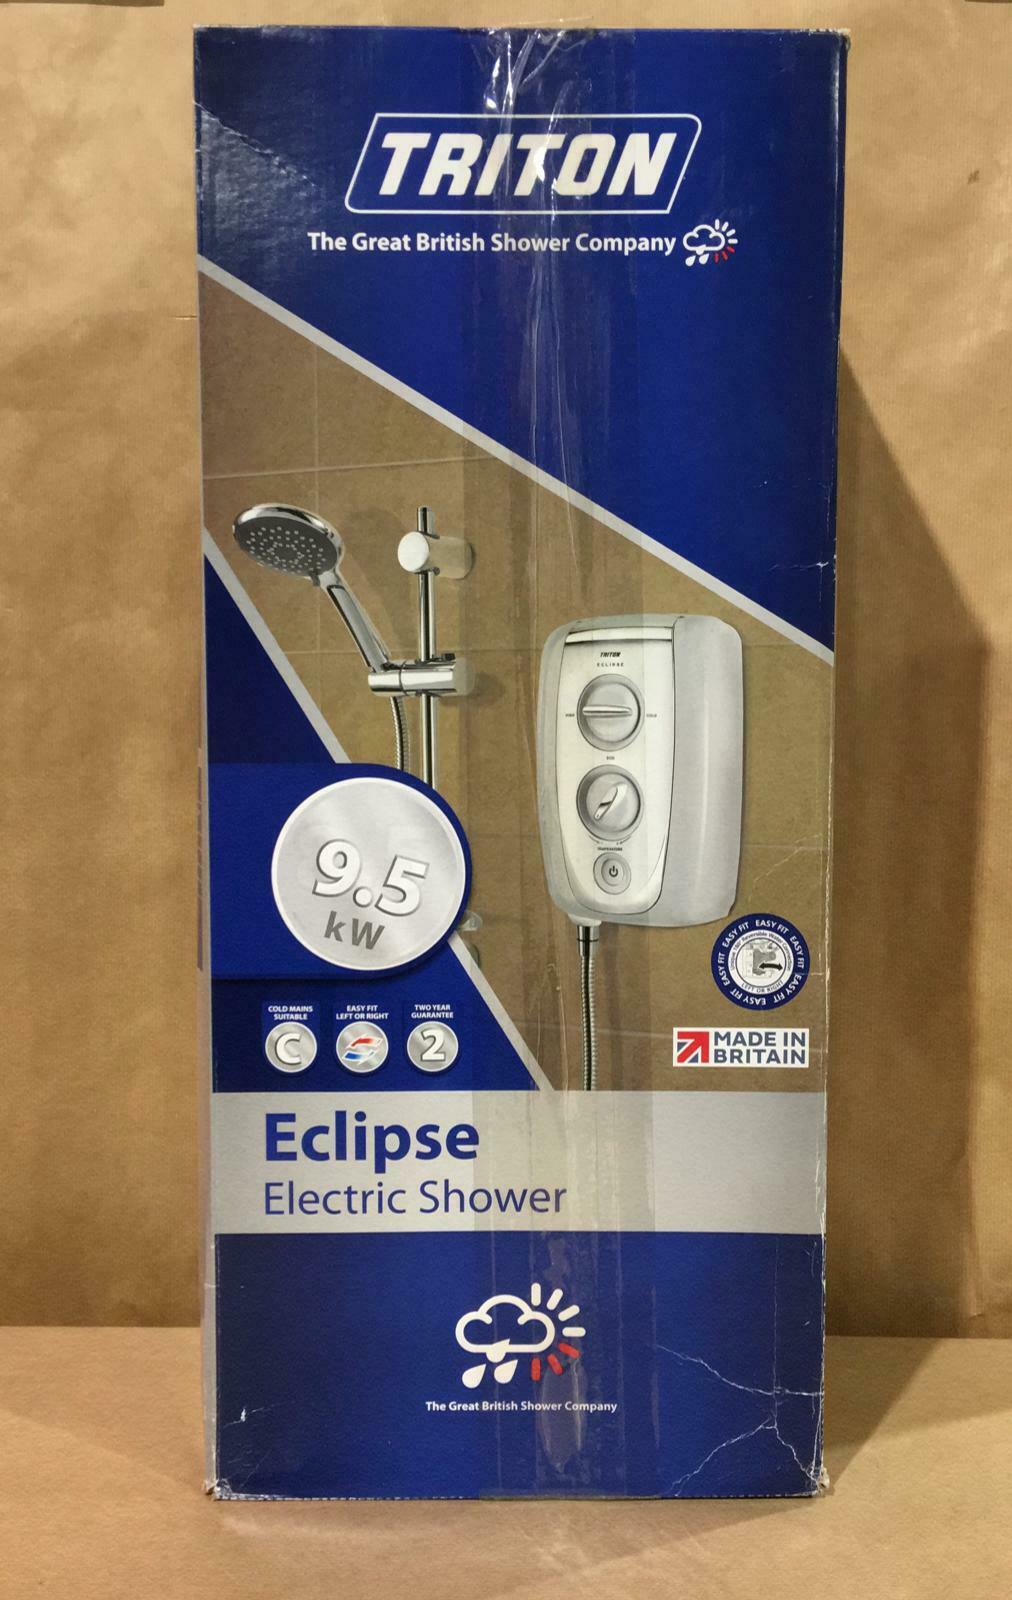 Triton Eclipse White Chrome effect Electric Shower, 9.5kW 8598